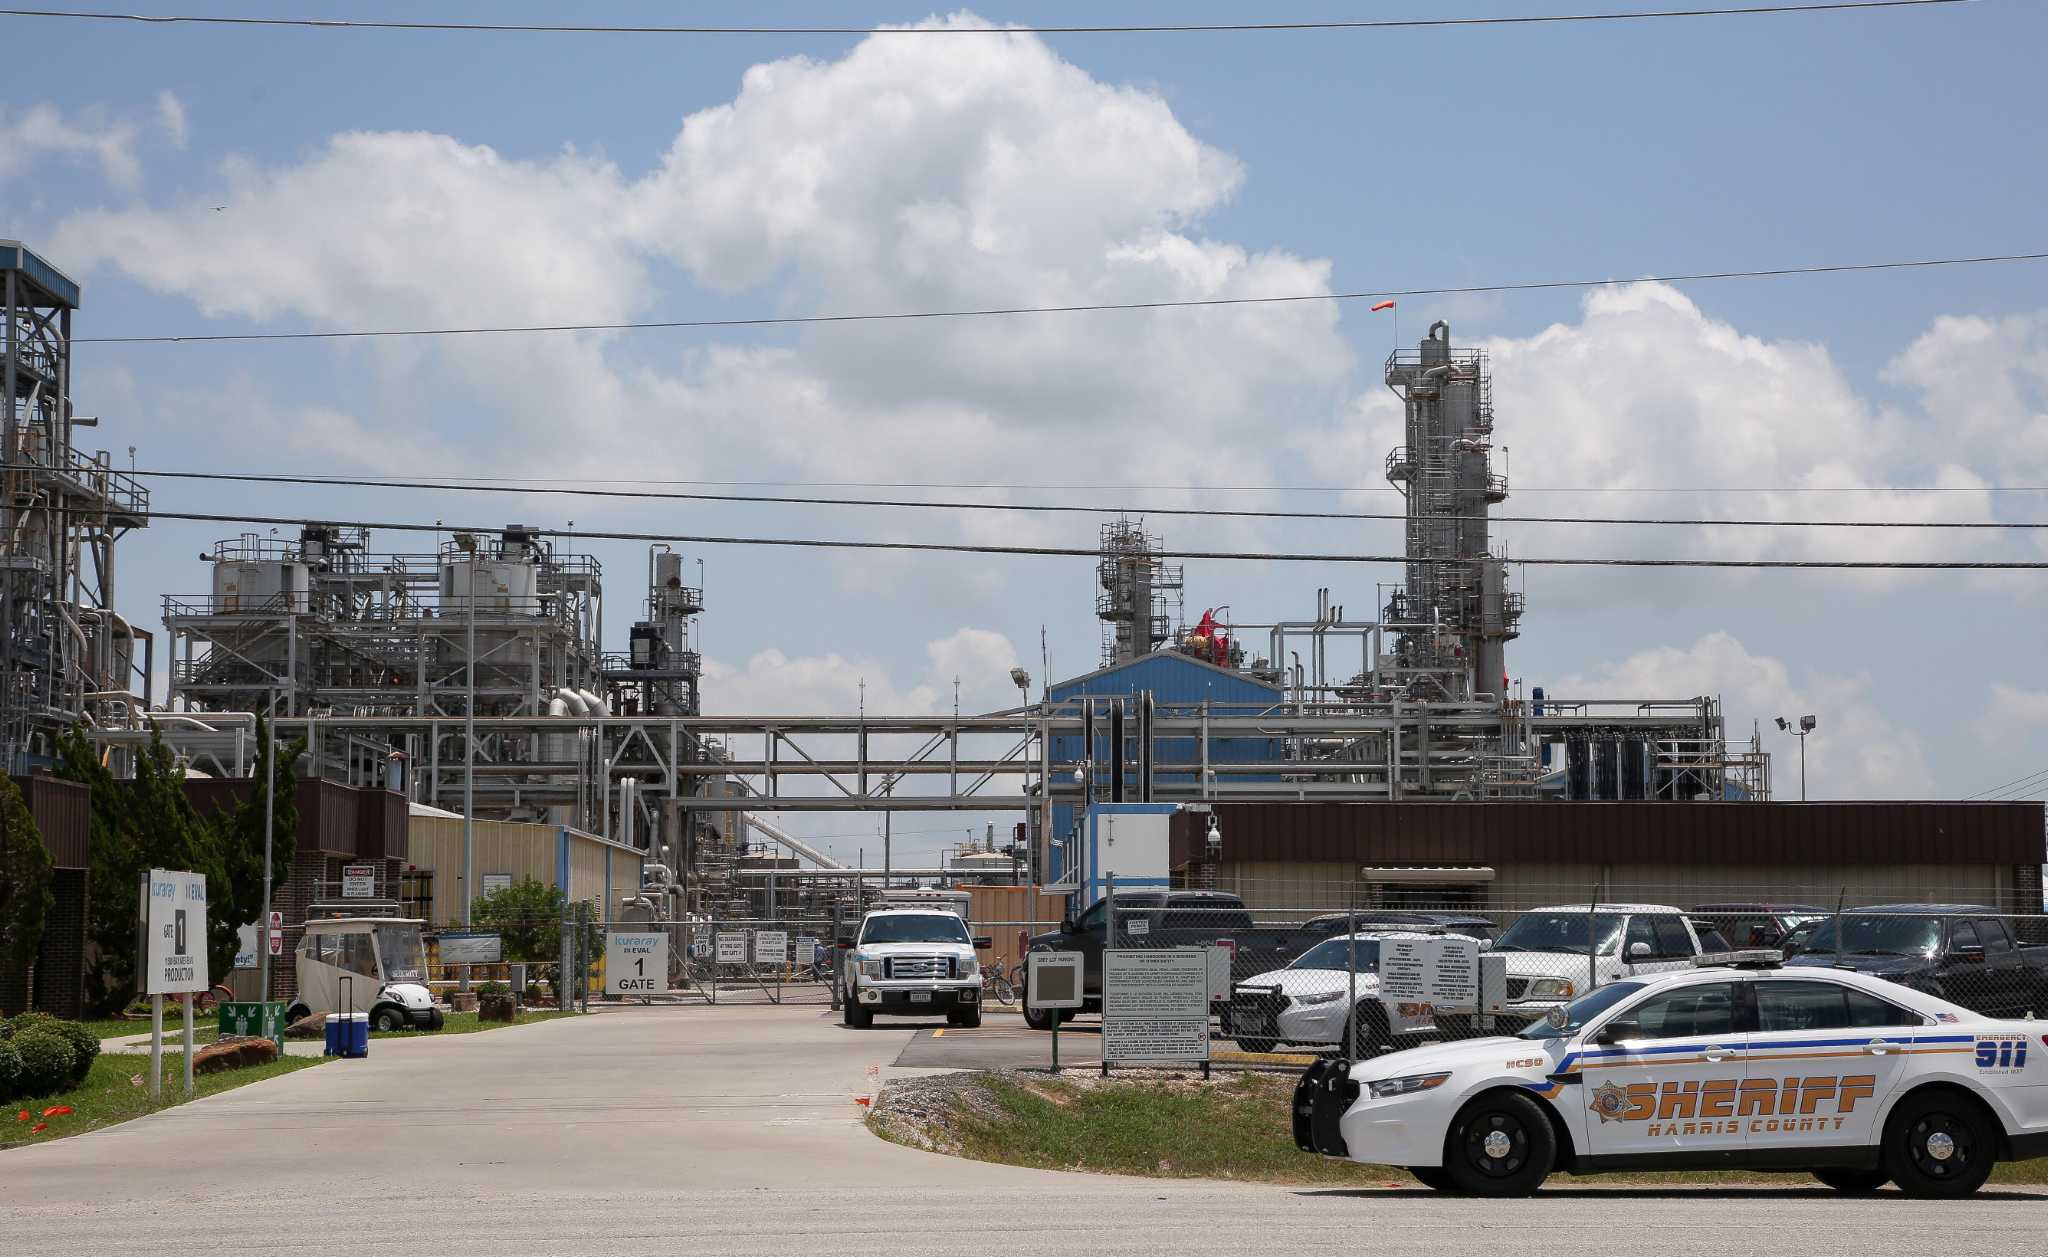 Chemical Safety Board, OSHA investigate Kuraray explosion - HoustonChronicle.com